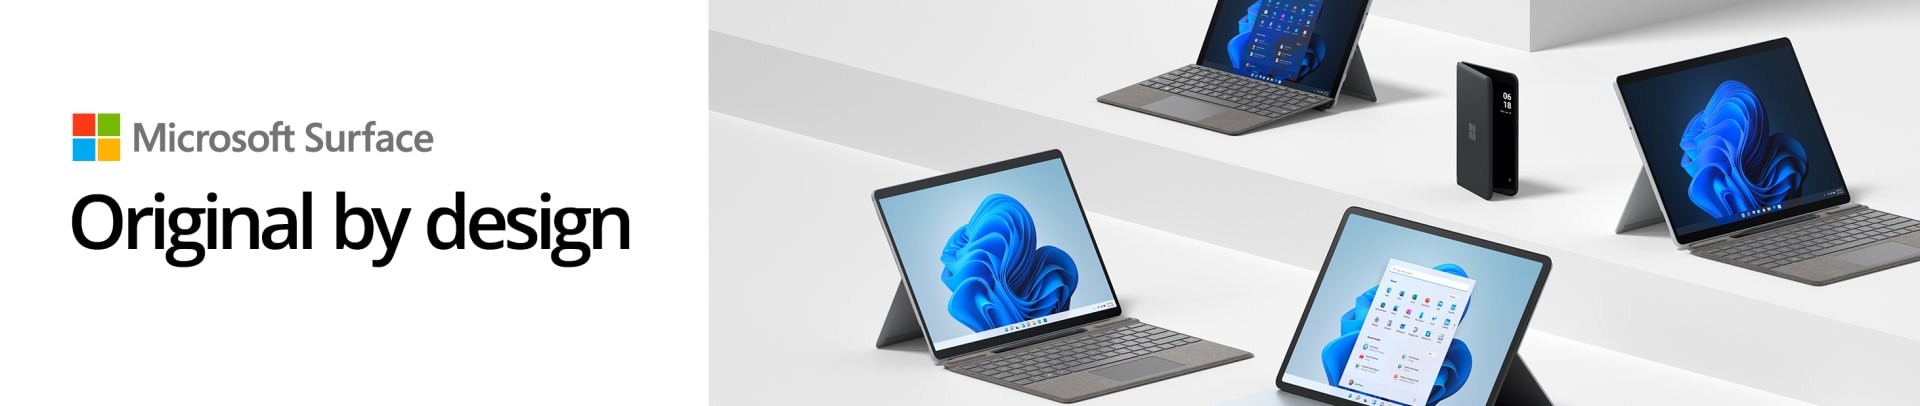 Microsoft Surface. Original by design